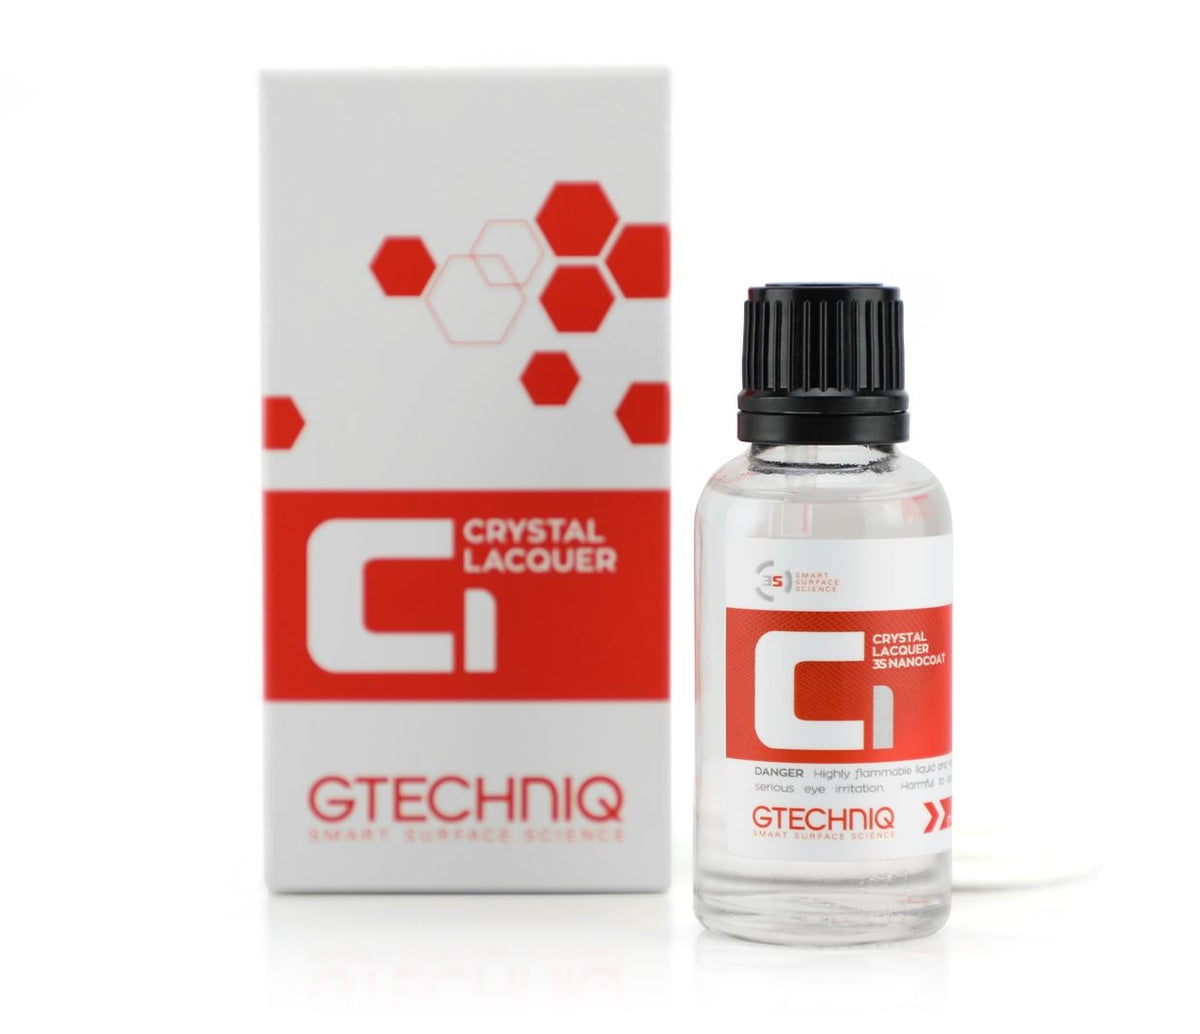 Gtechniq C1 Crystal Lacquer 250ml | Ceramic Paint Coating